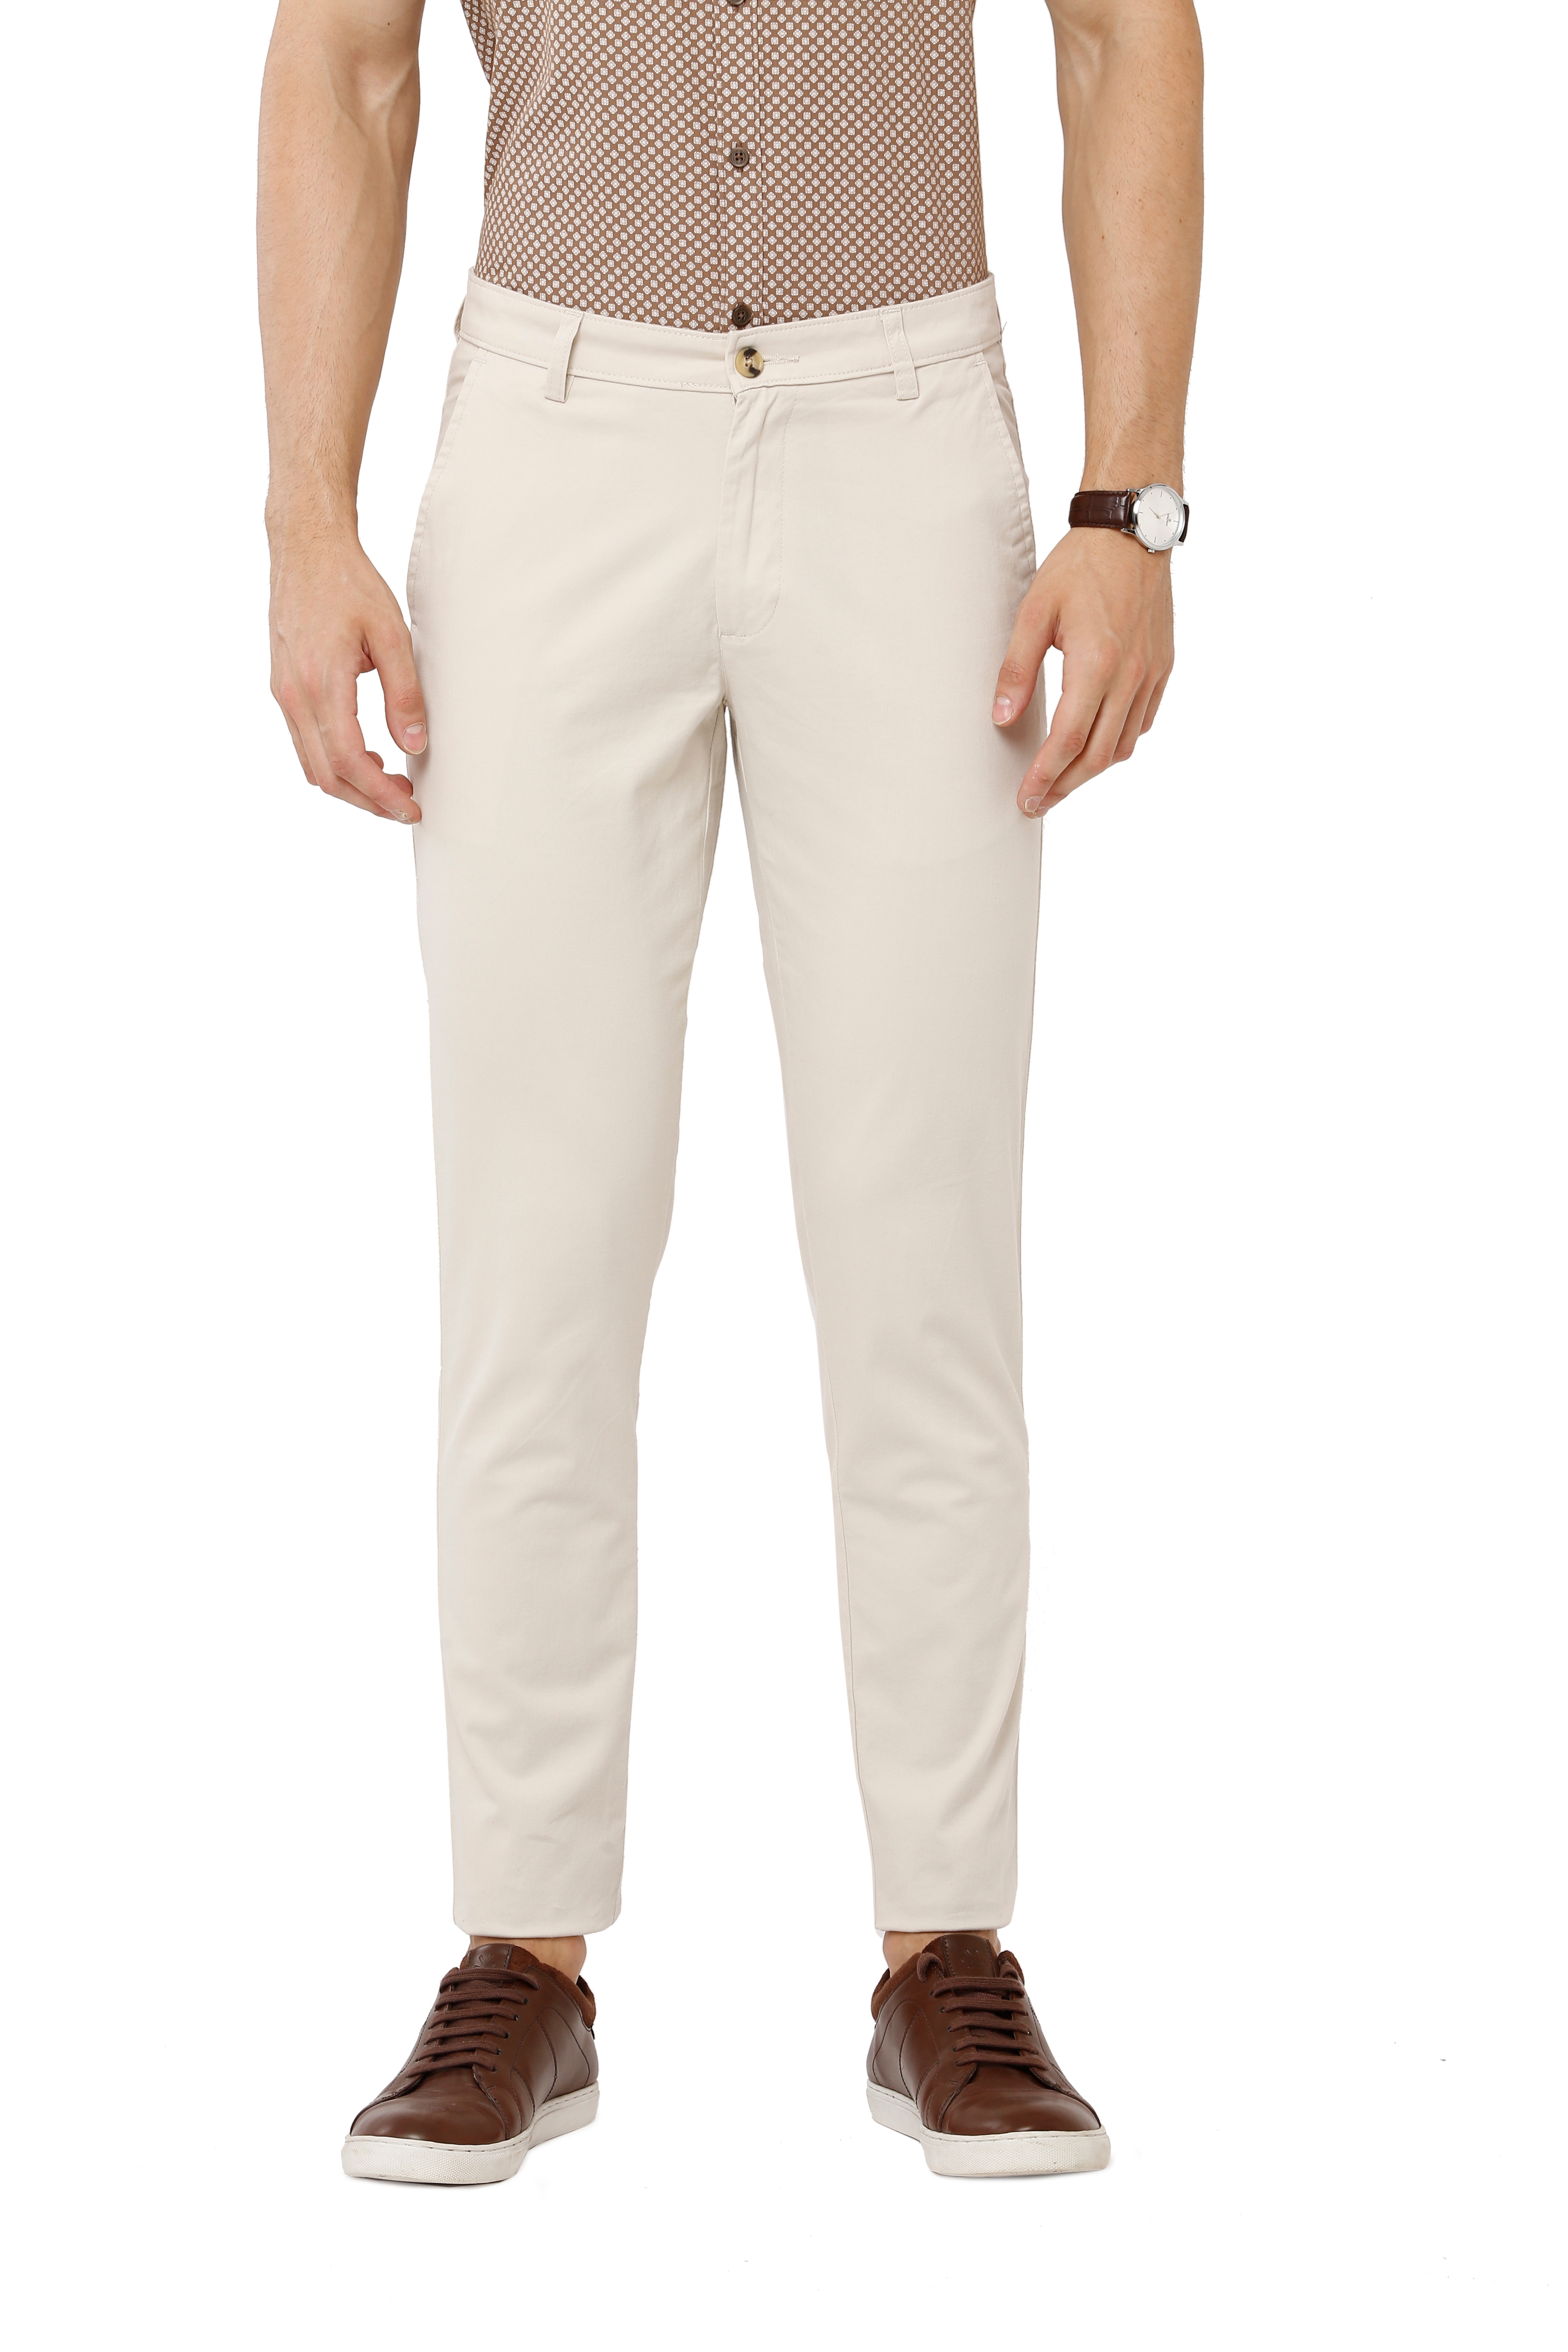 Polo Ralph Lauren Mens Chino Classic Fit Pants Bedford Big & Tall Black  58B/32 | eBay